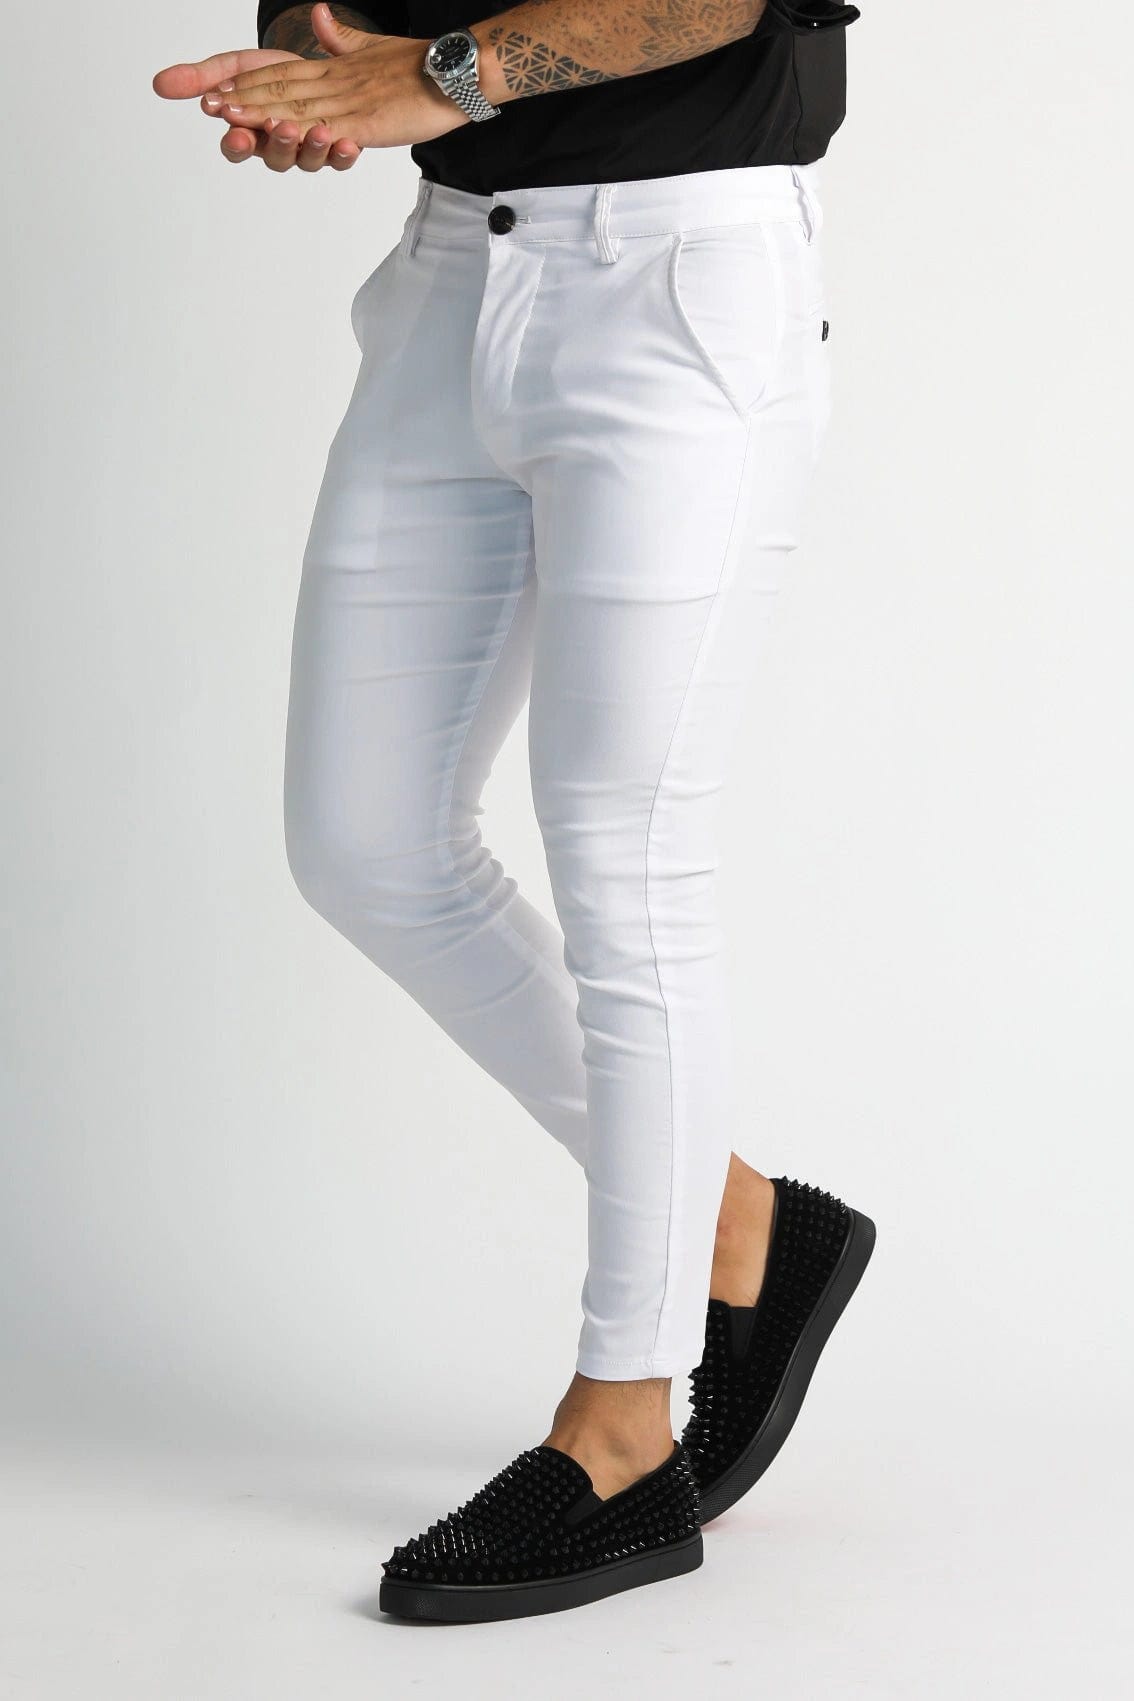 men's pants,men's dress pants,Men's Side Pocket Trousers With Zipper  Placket Skinny Jeans - Walmart.com